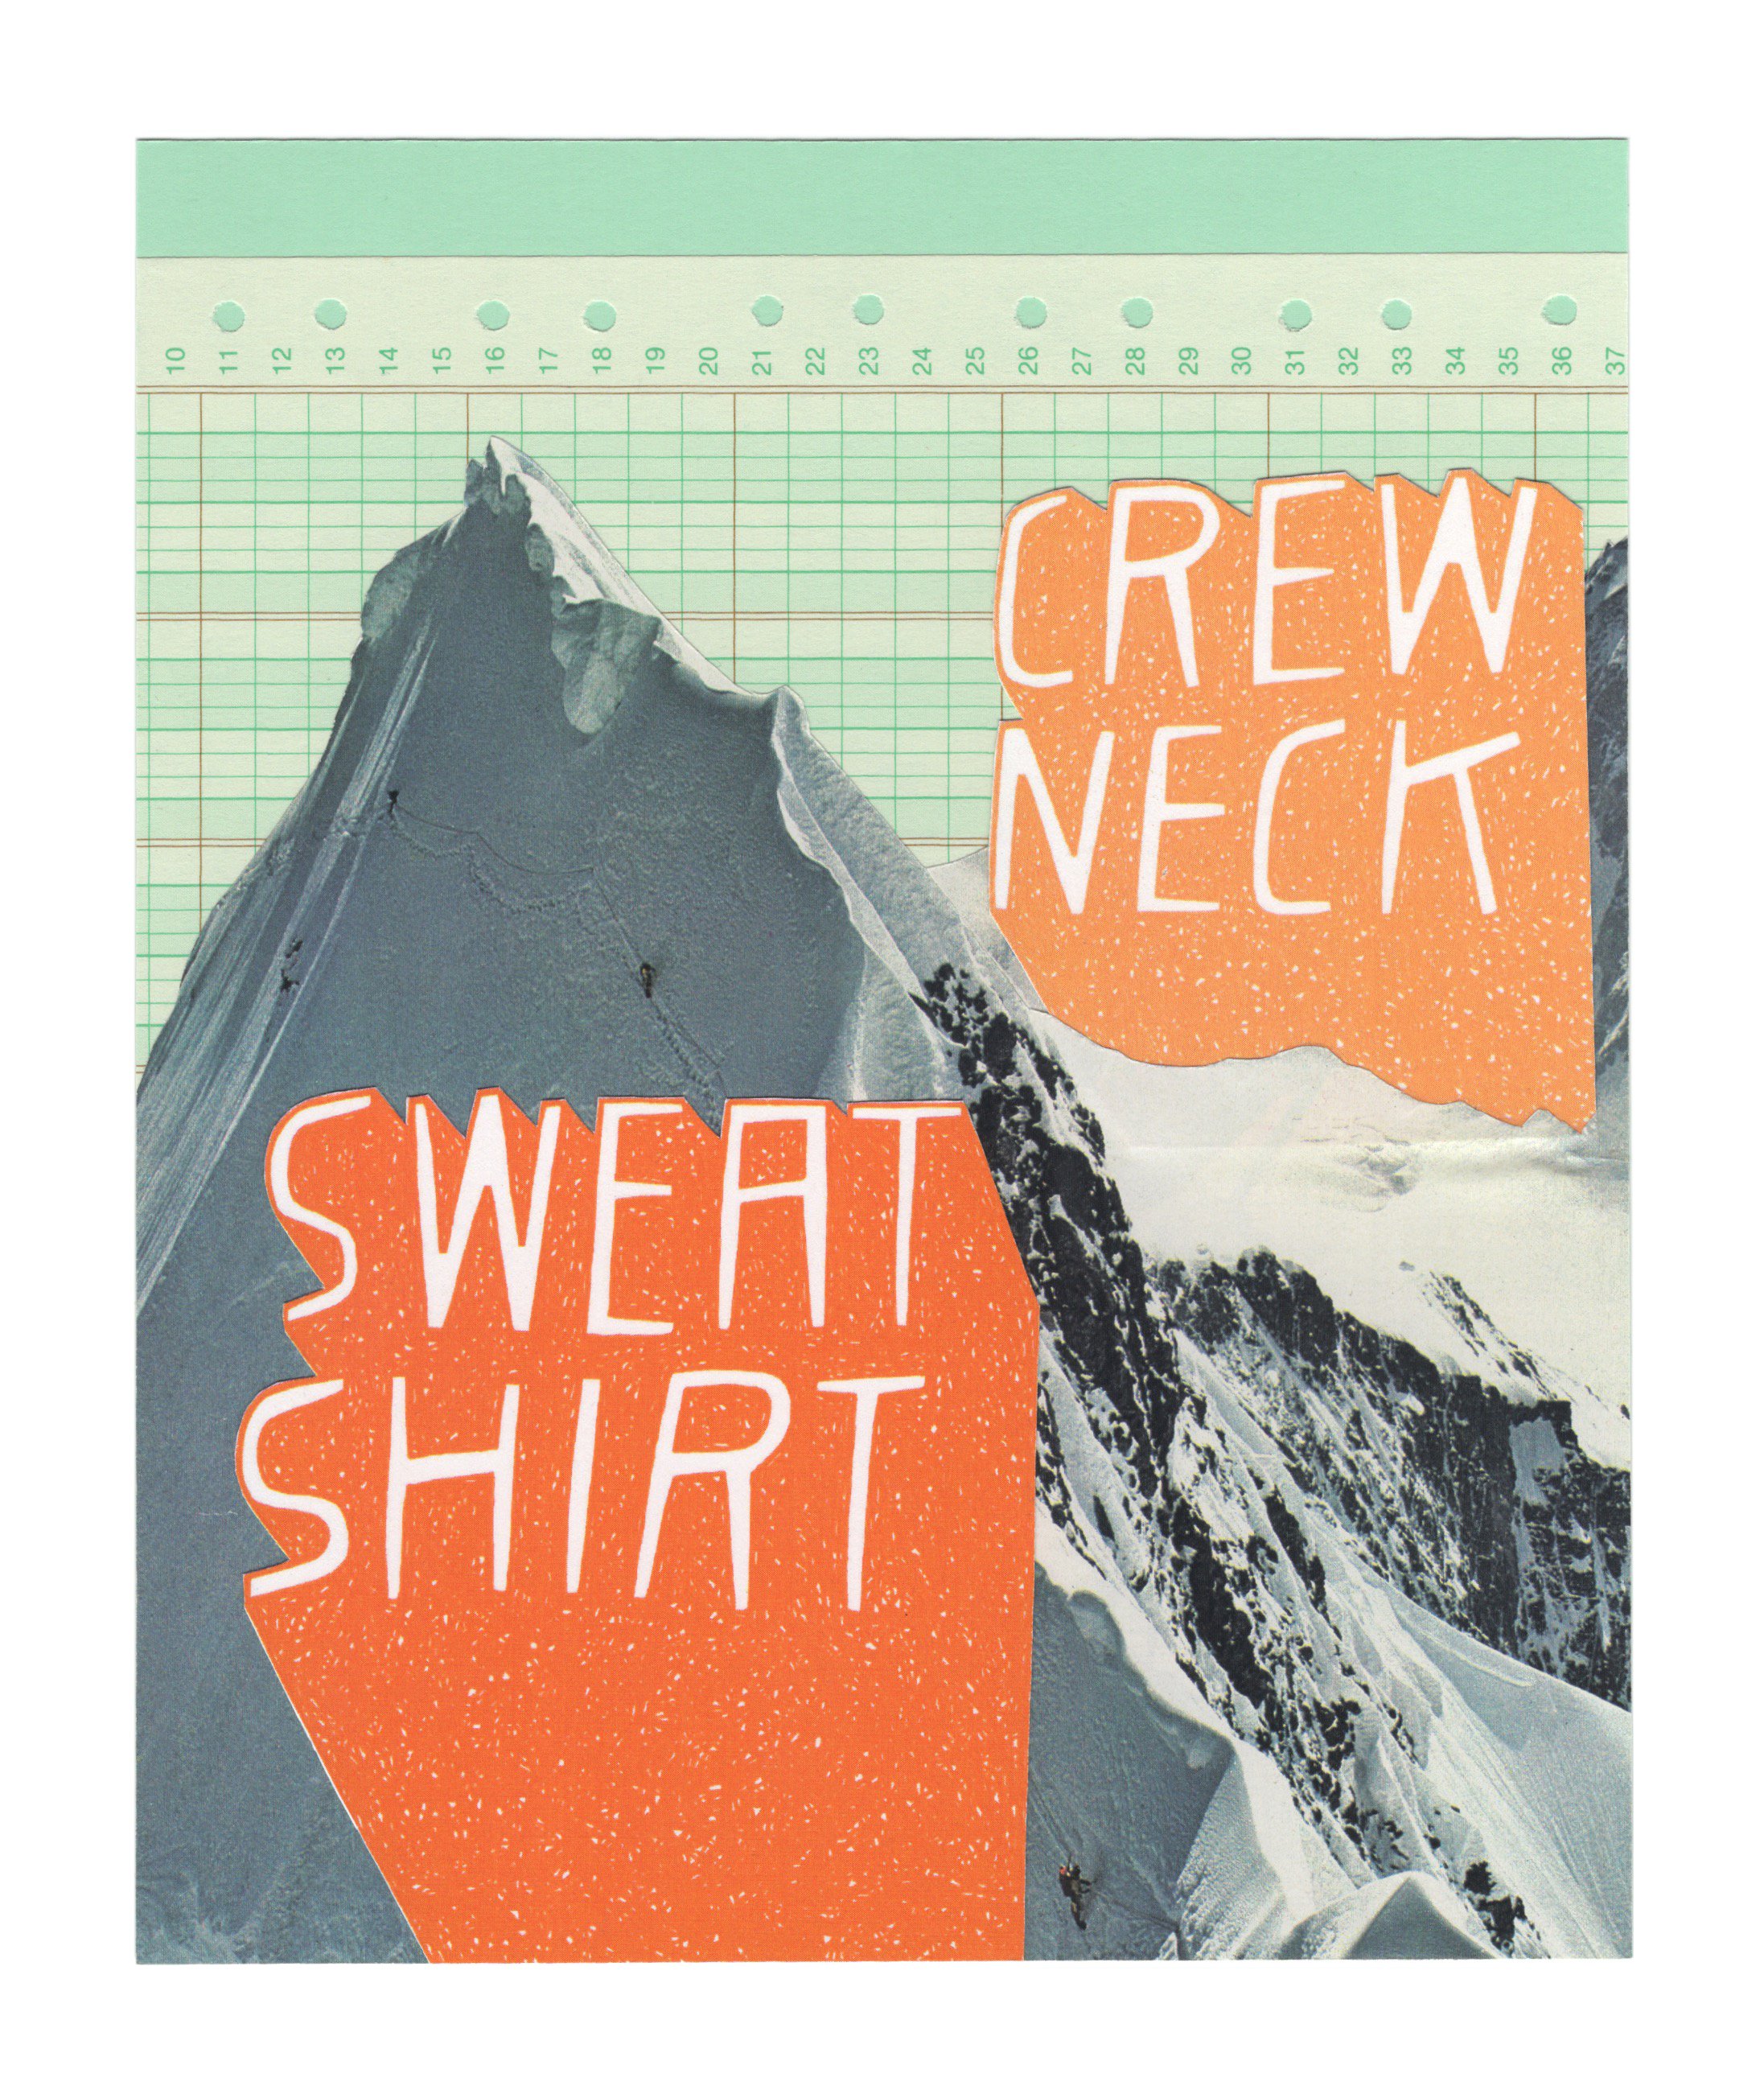 Crew Neck Sweat Shirt.jpeg